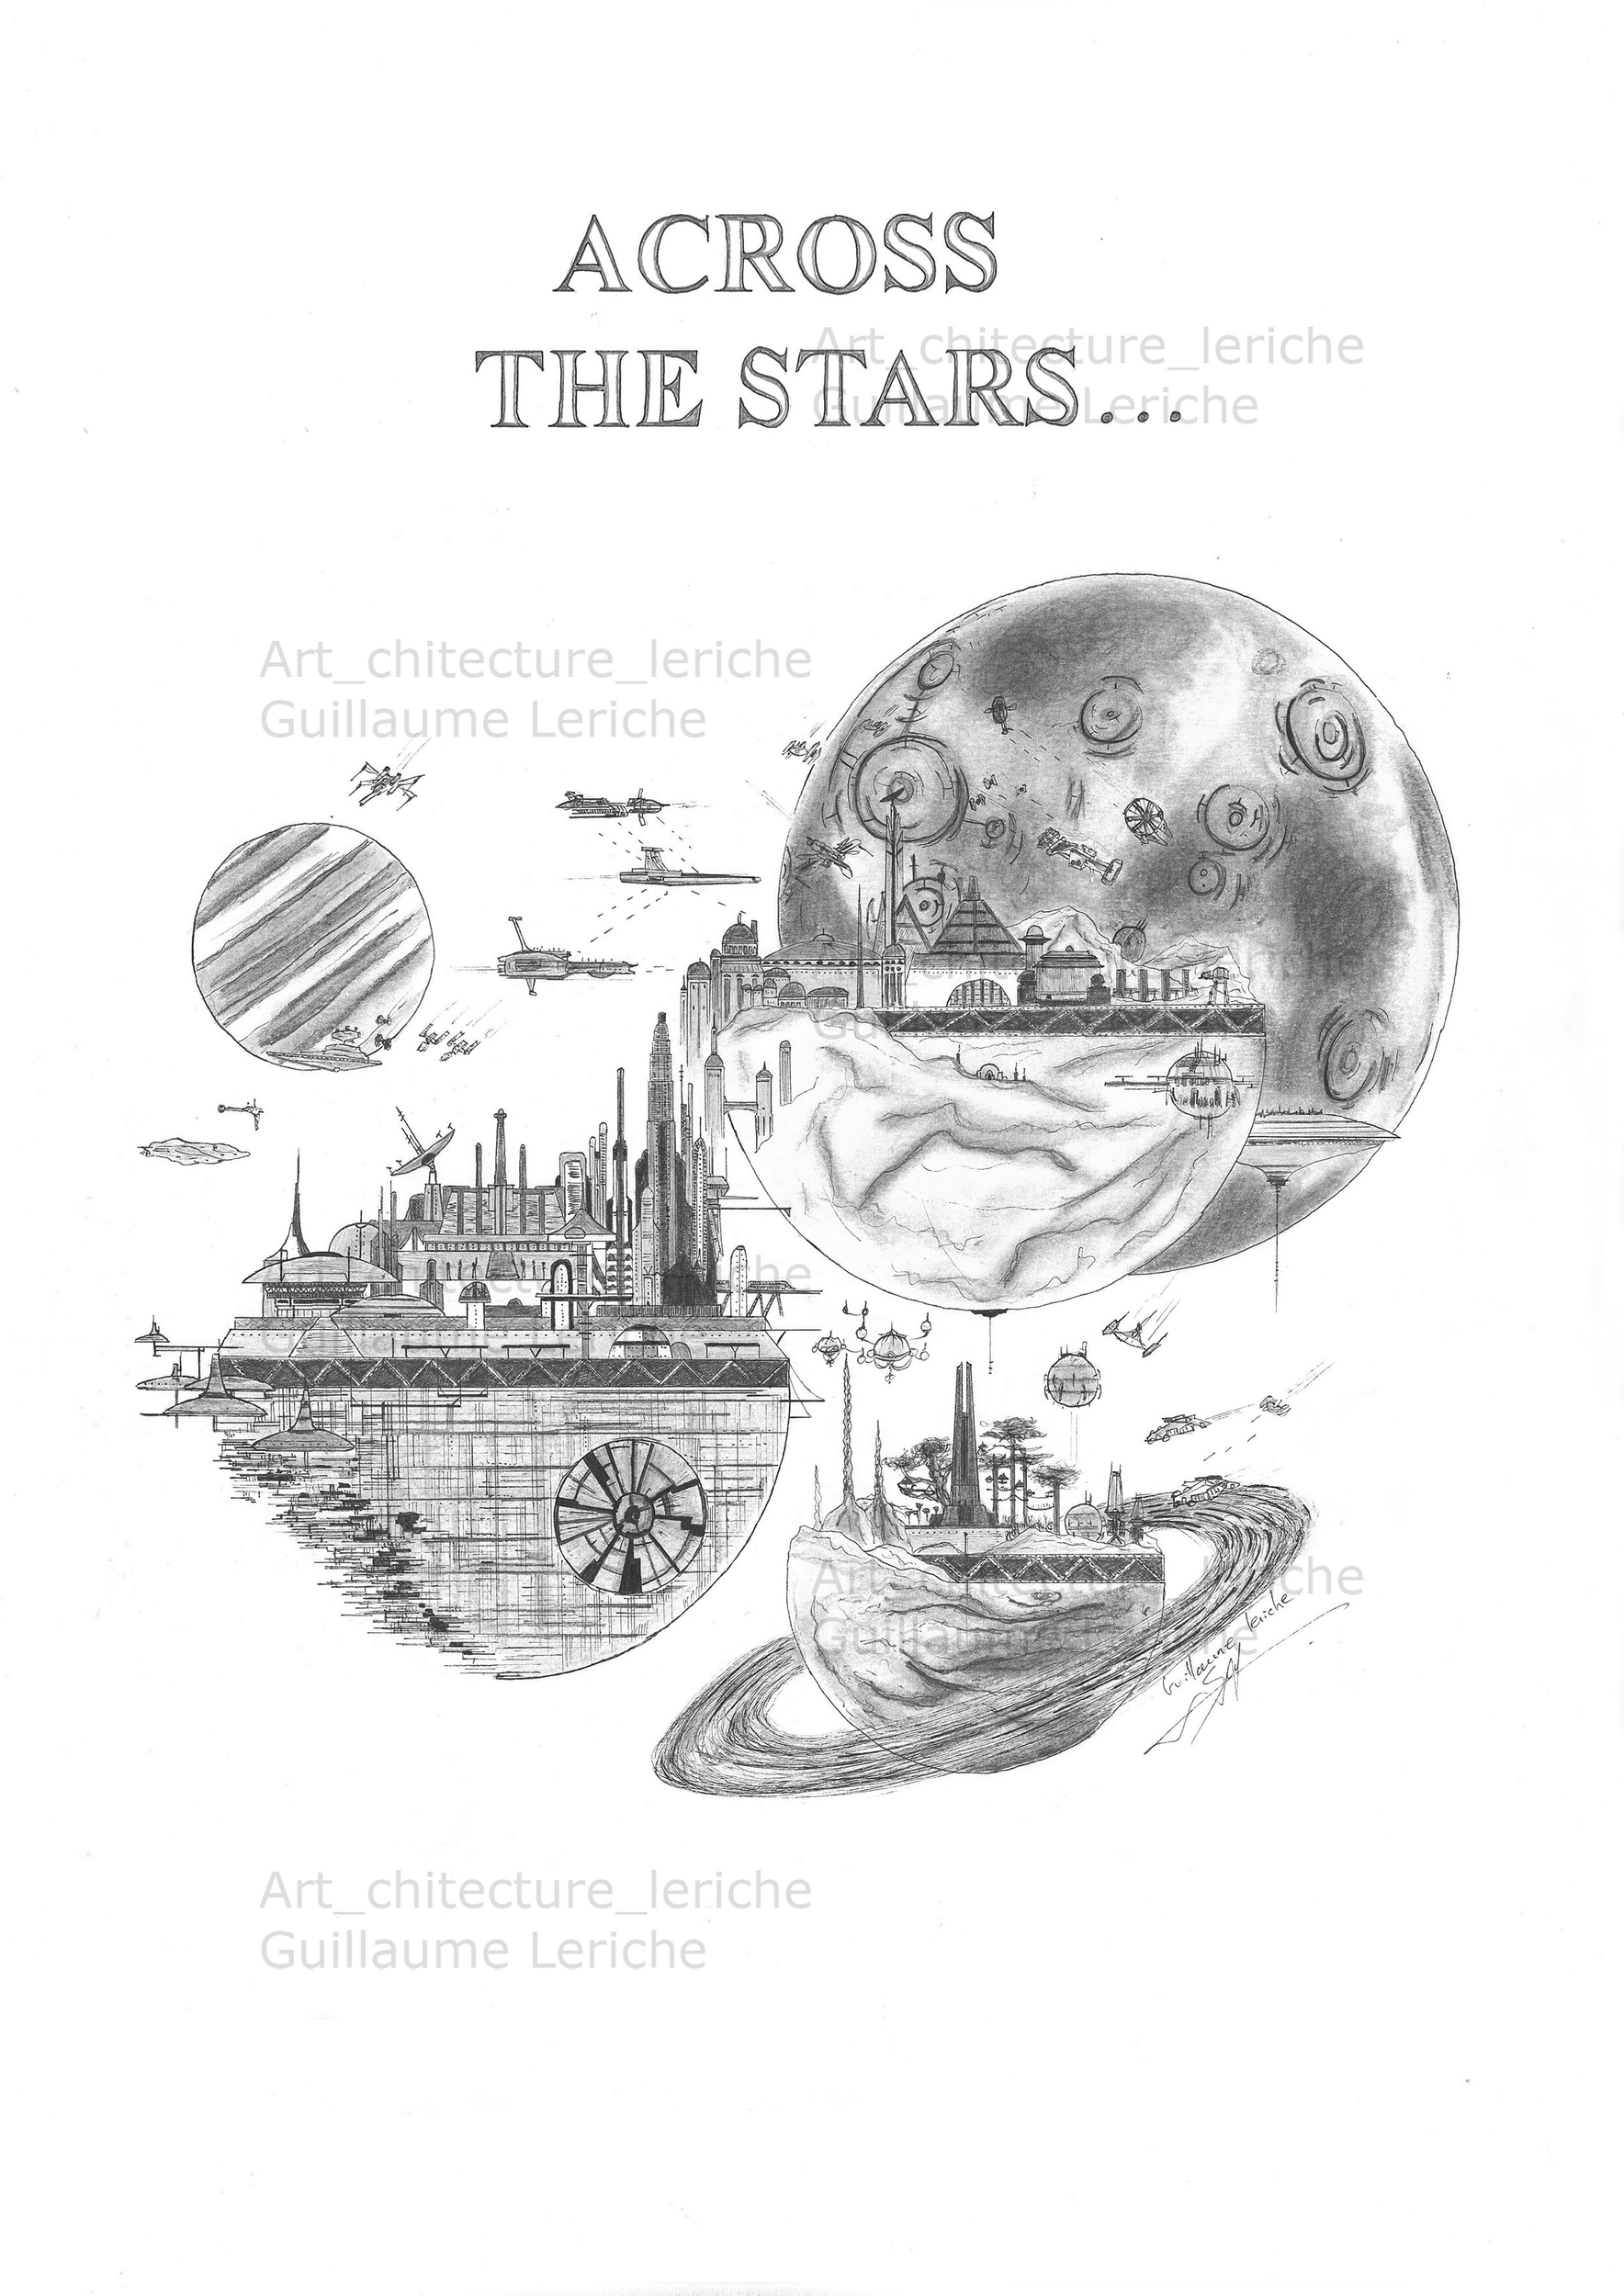 Across the stars Guillaume Leriche copyright